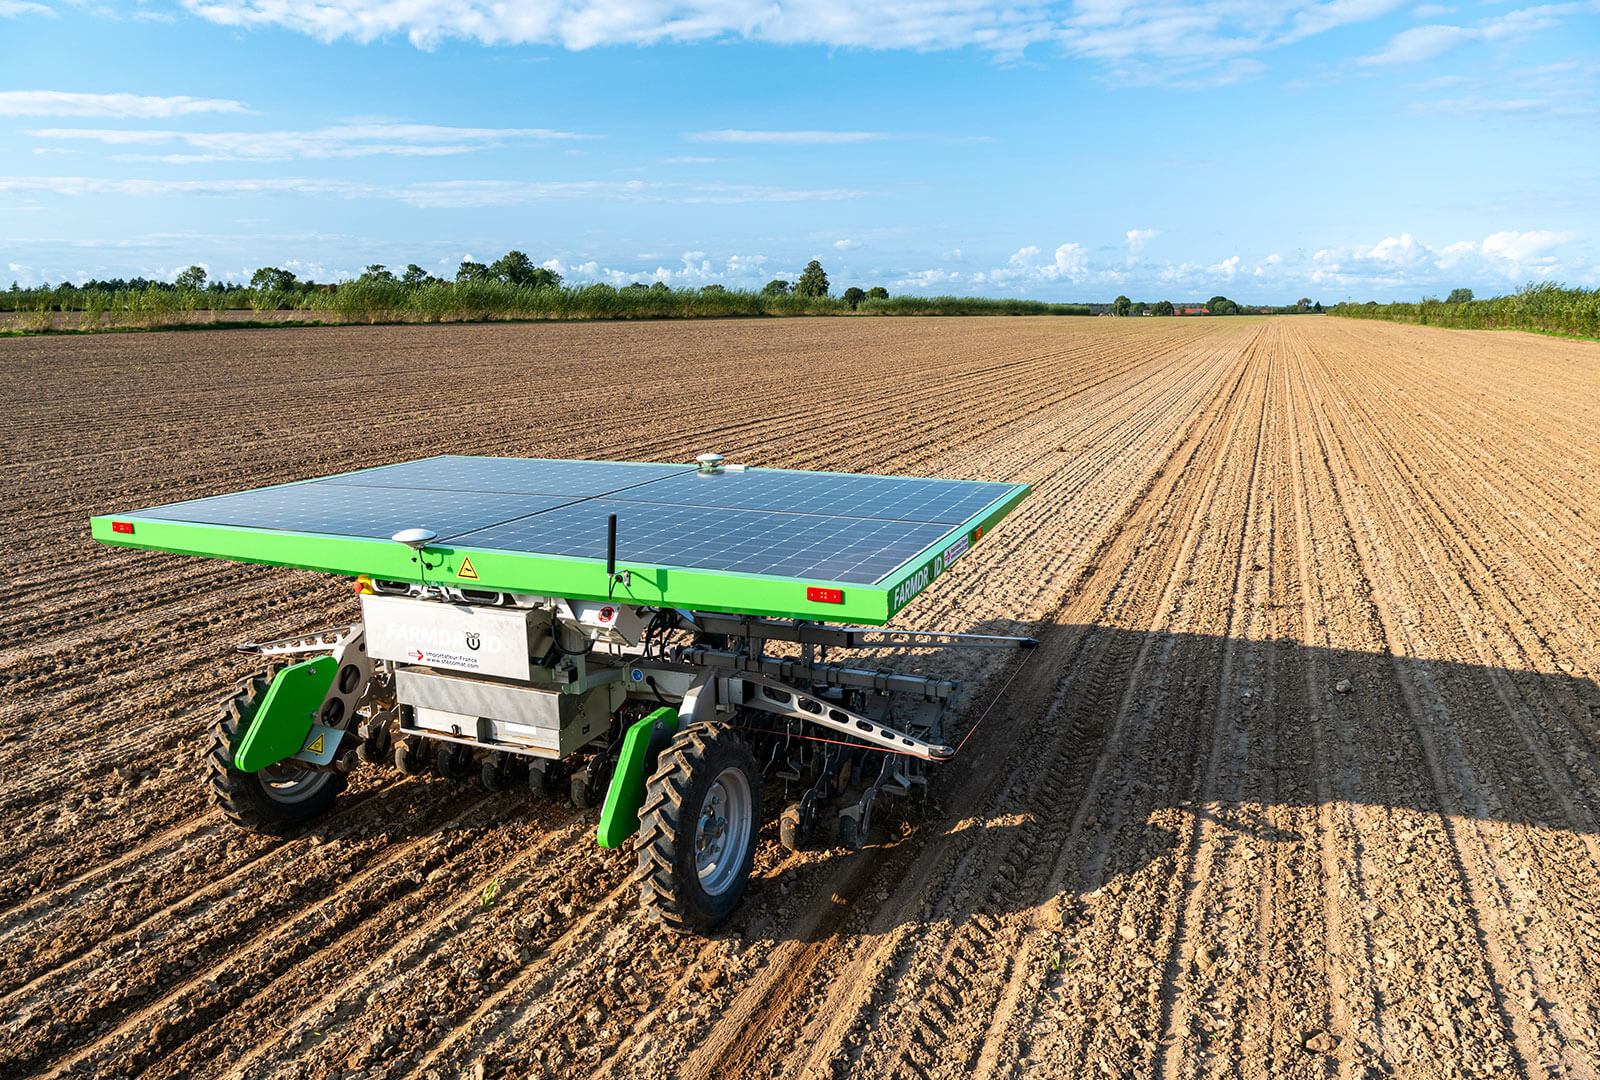 An autonomous, AI-powered seeding / weeding drone working on a farm